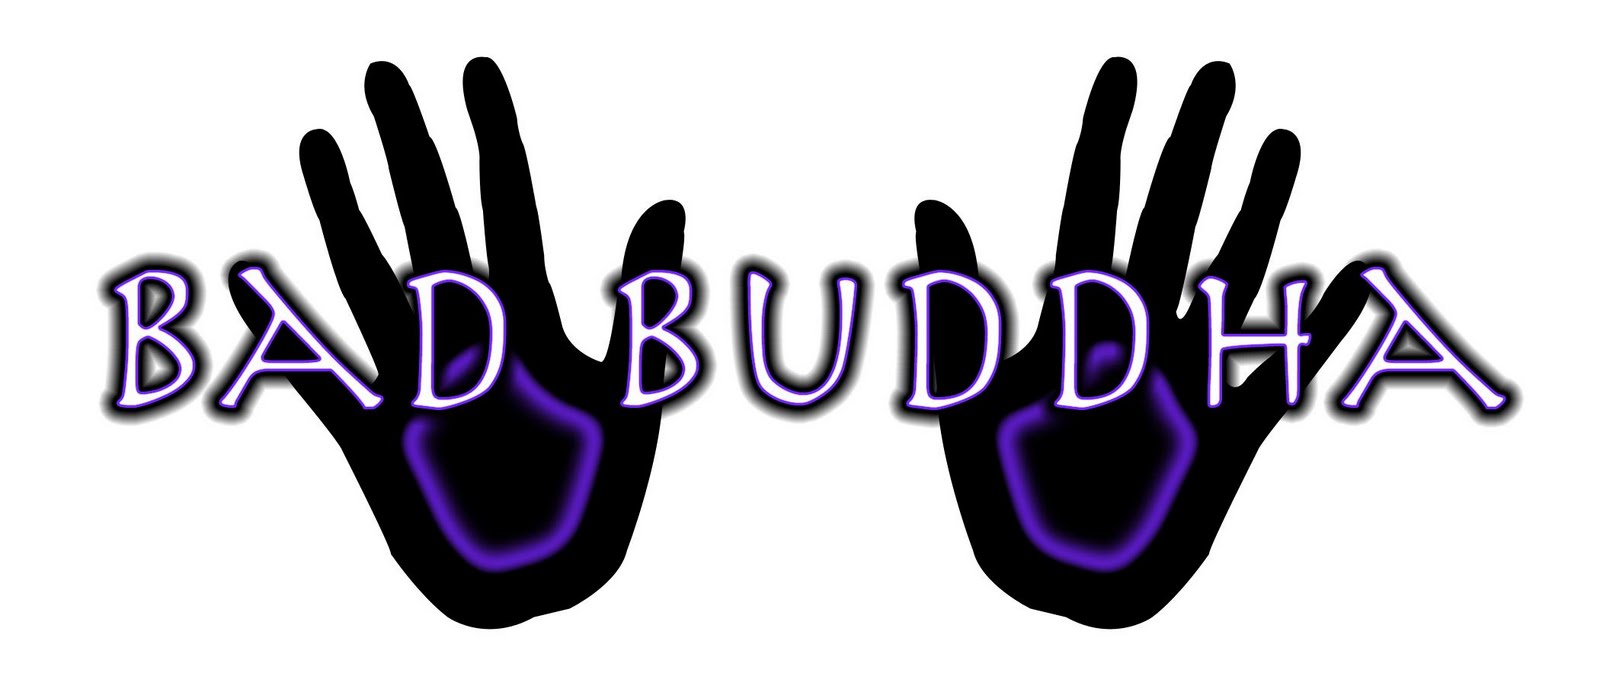 [bad+buddha+hands+logo.JPG]